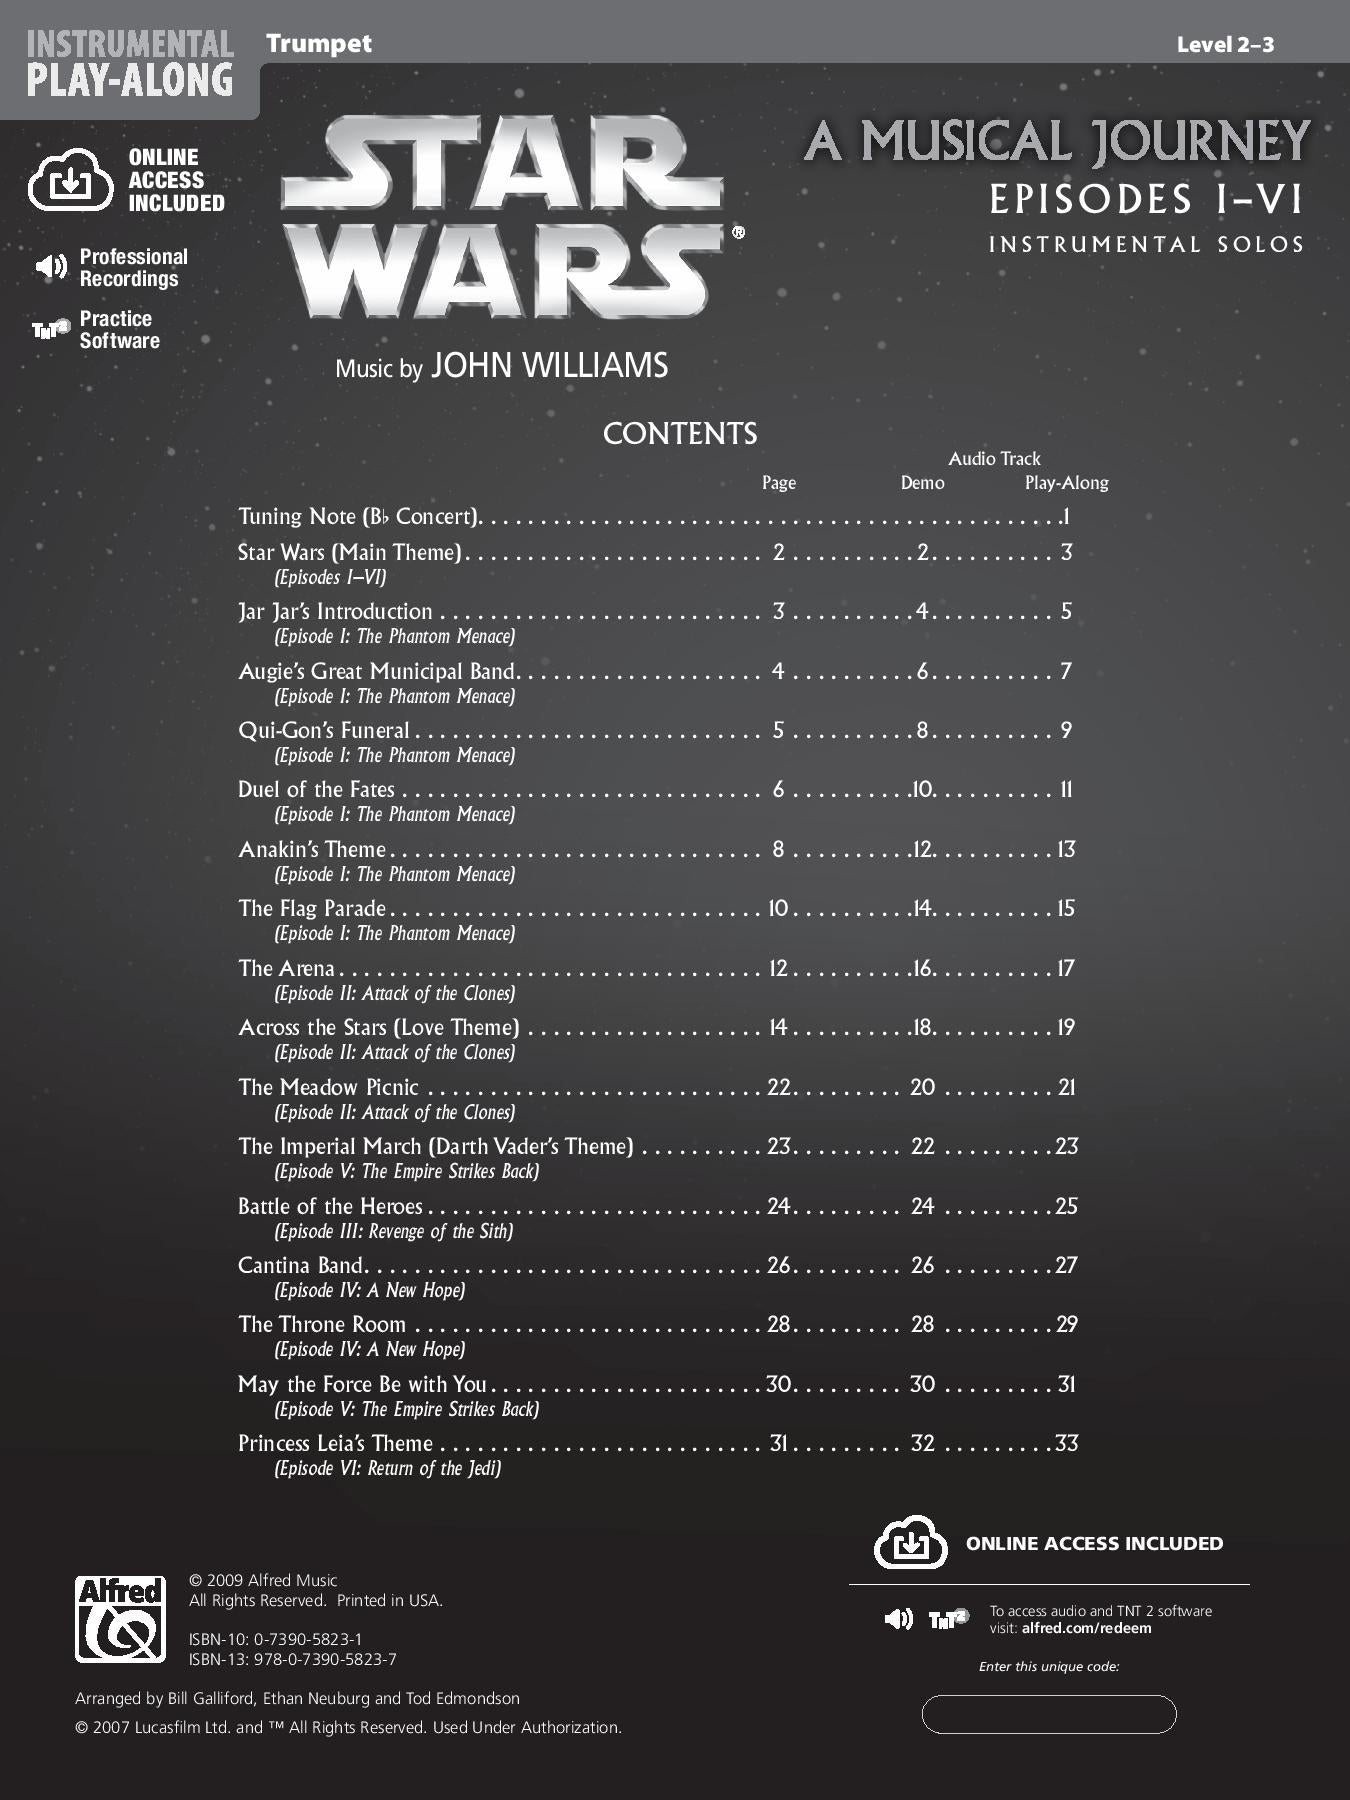 Star Wars Instrumental Solos (Movies I-VI) for Trumpet